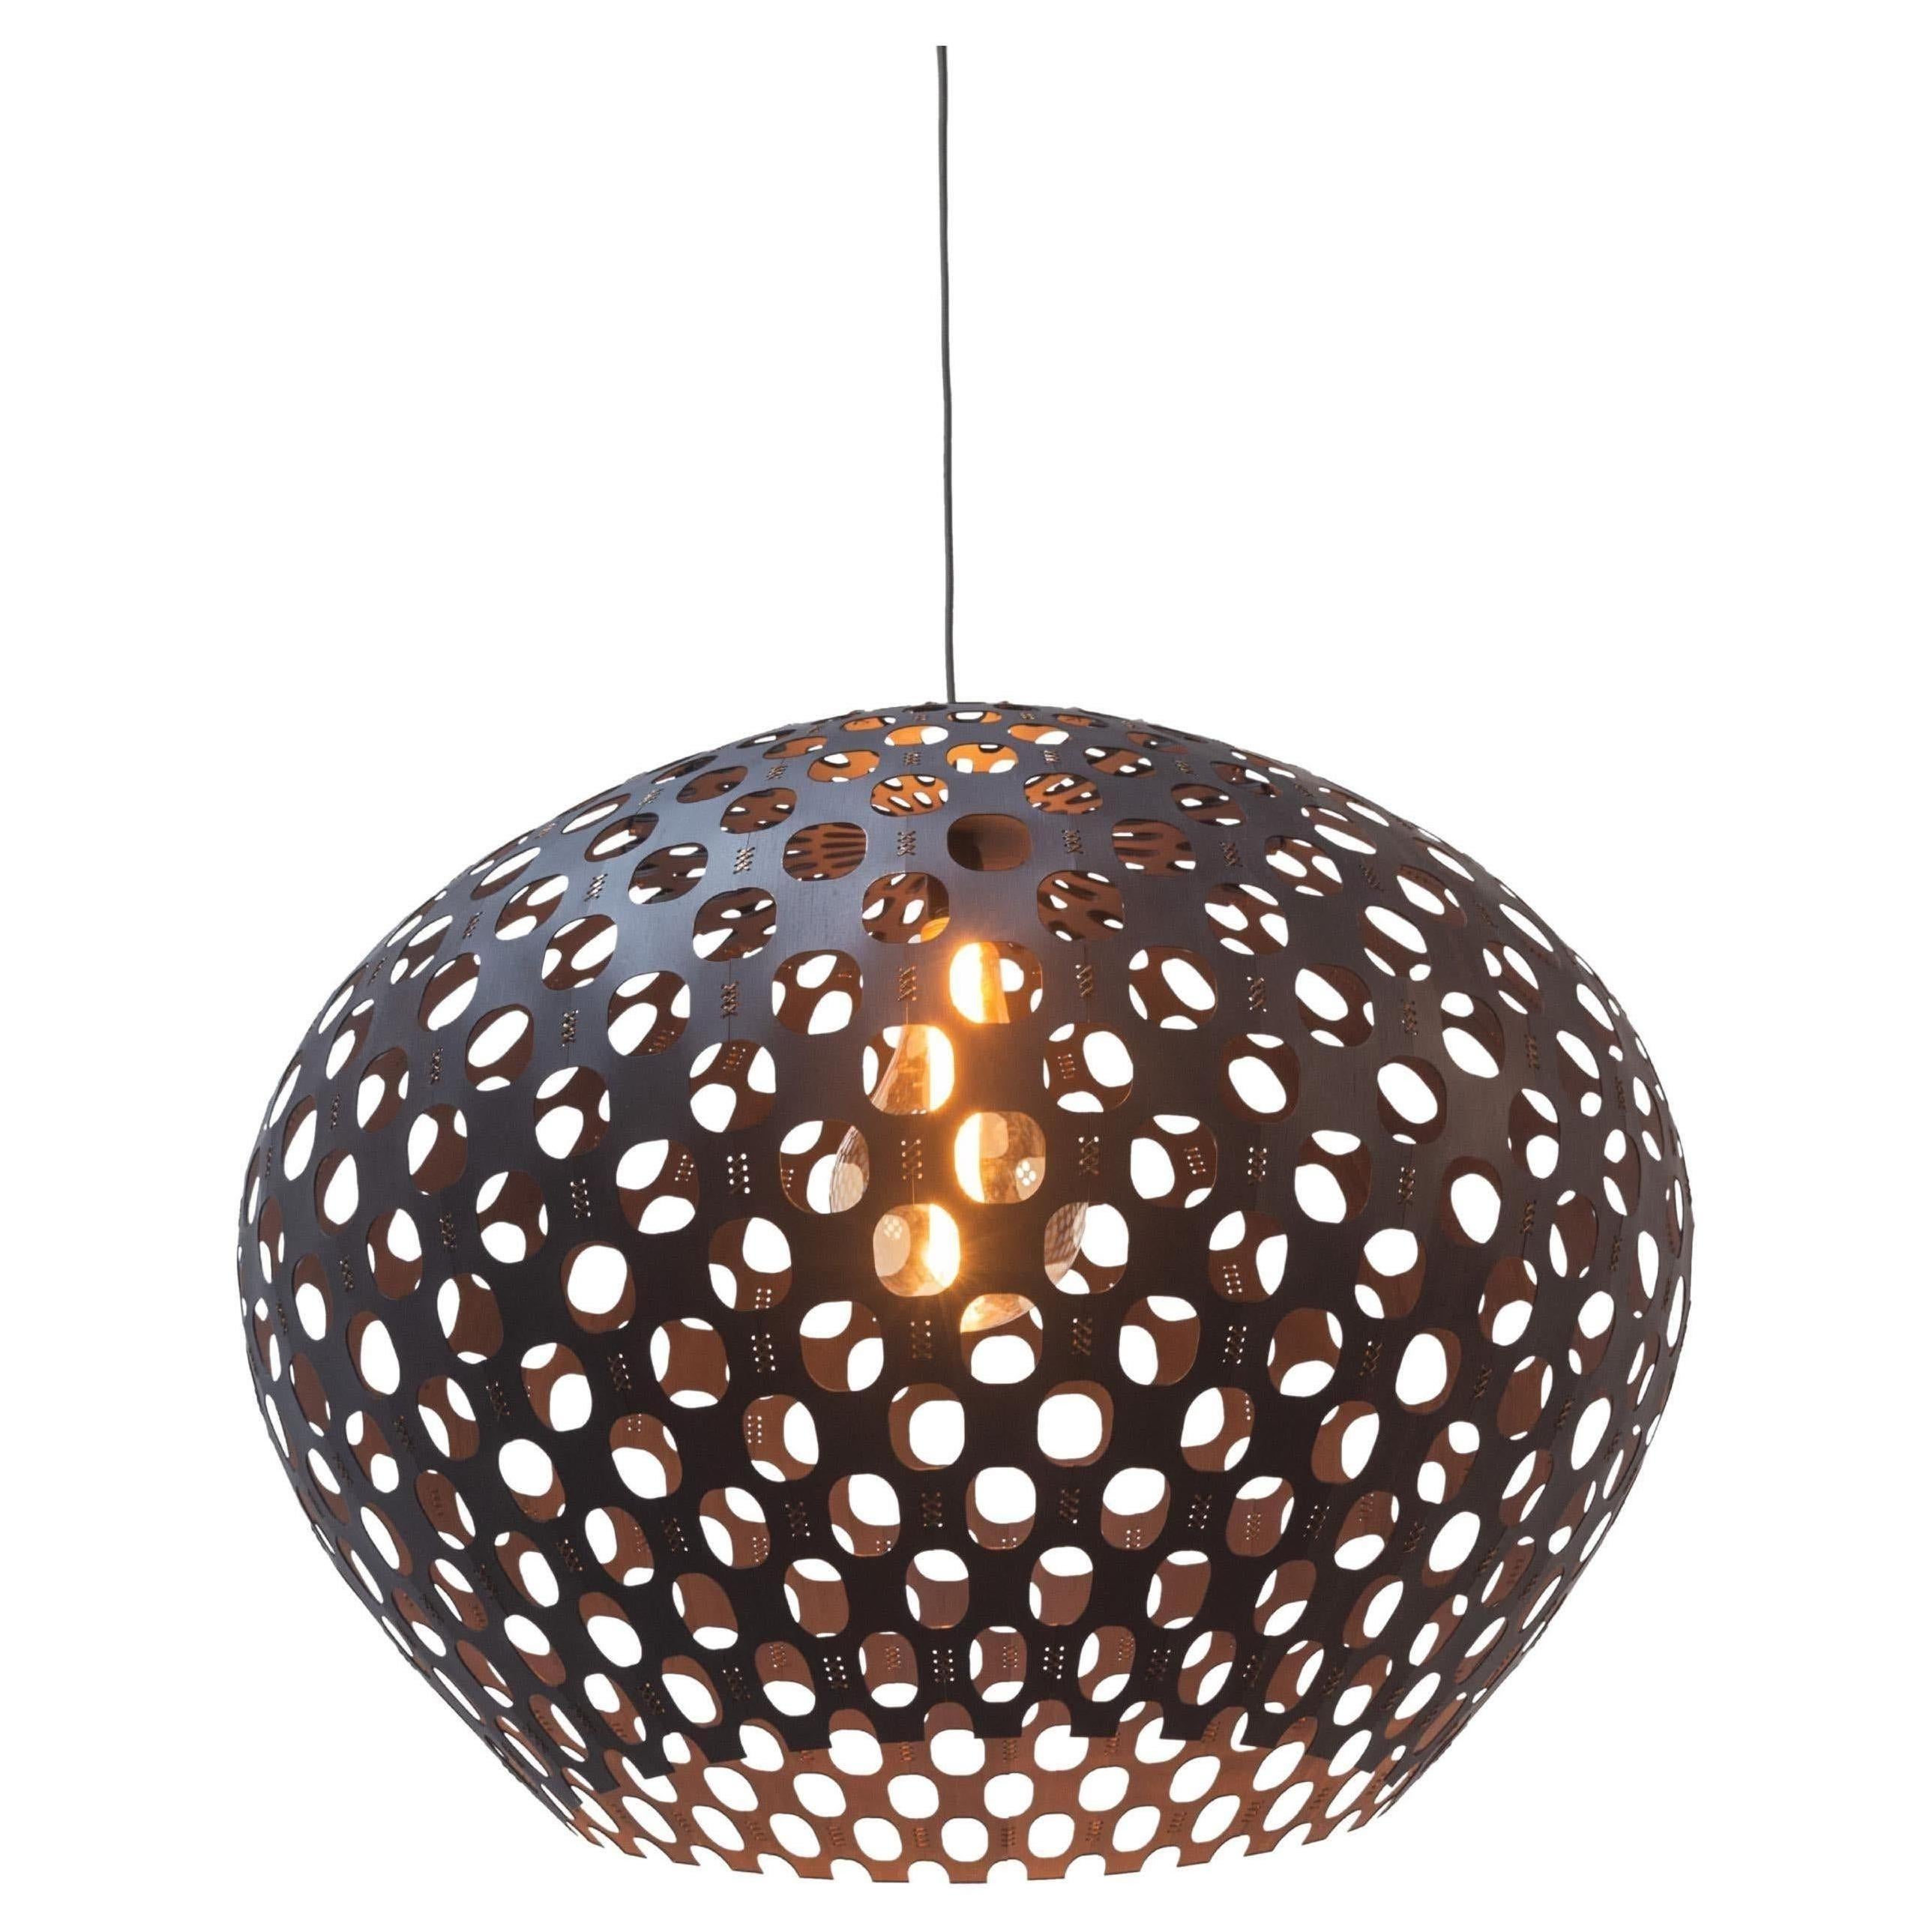 Panelitos Sphere Lamp Medium by Piegatto, a Contemporary Sculptural Lamp